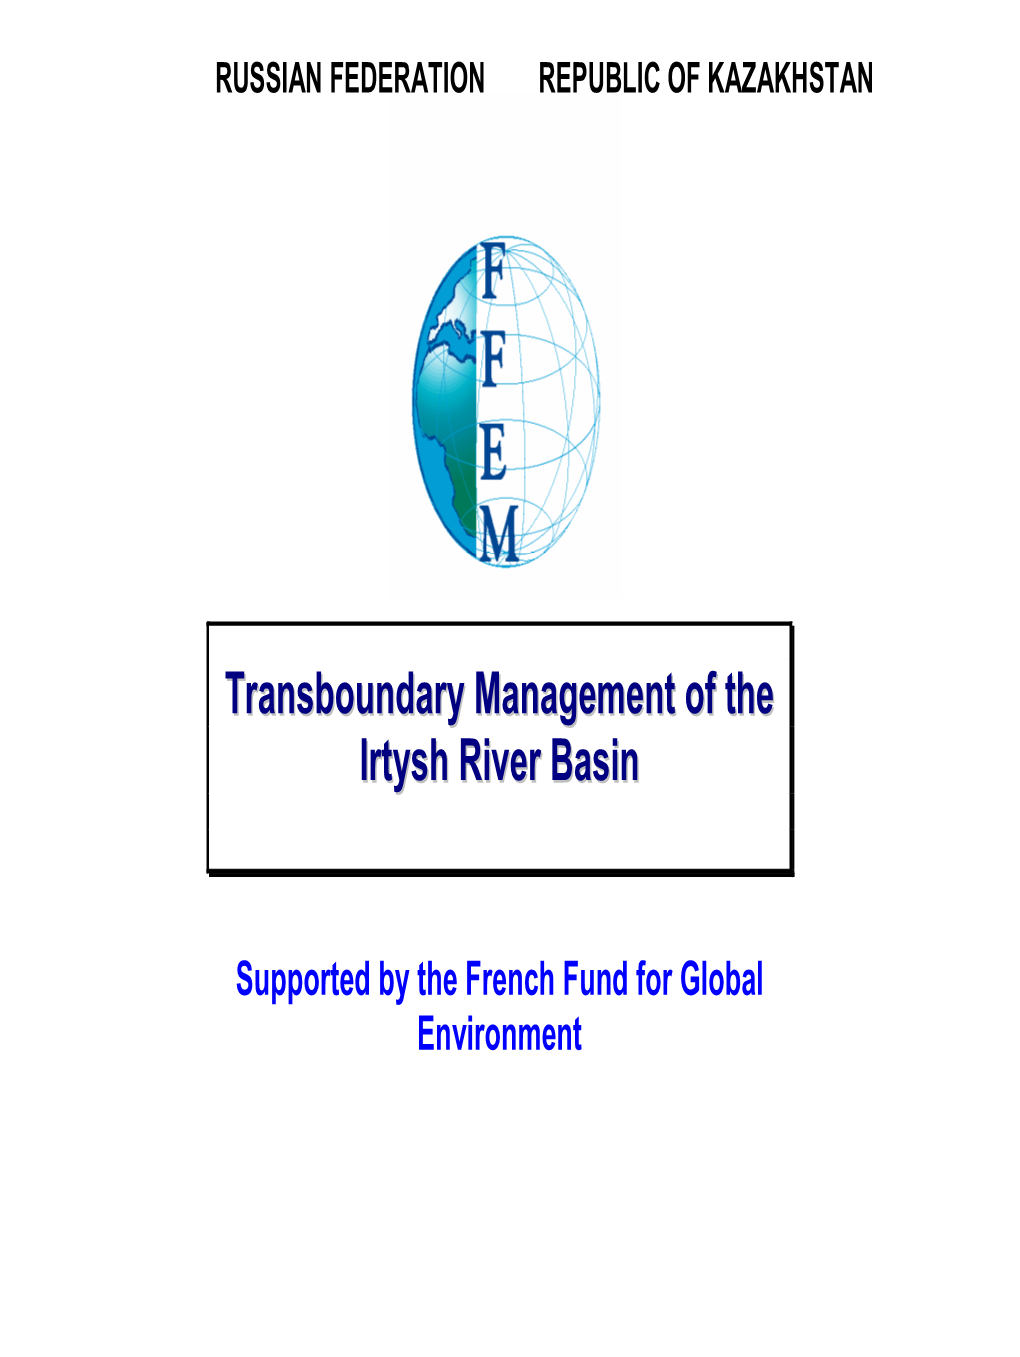 Transboundary Management of the Irtysh River Basin